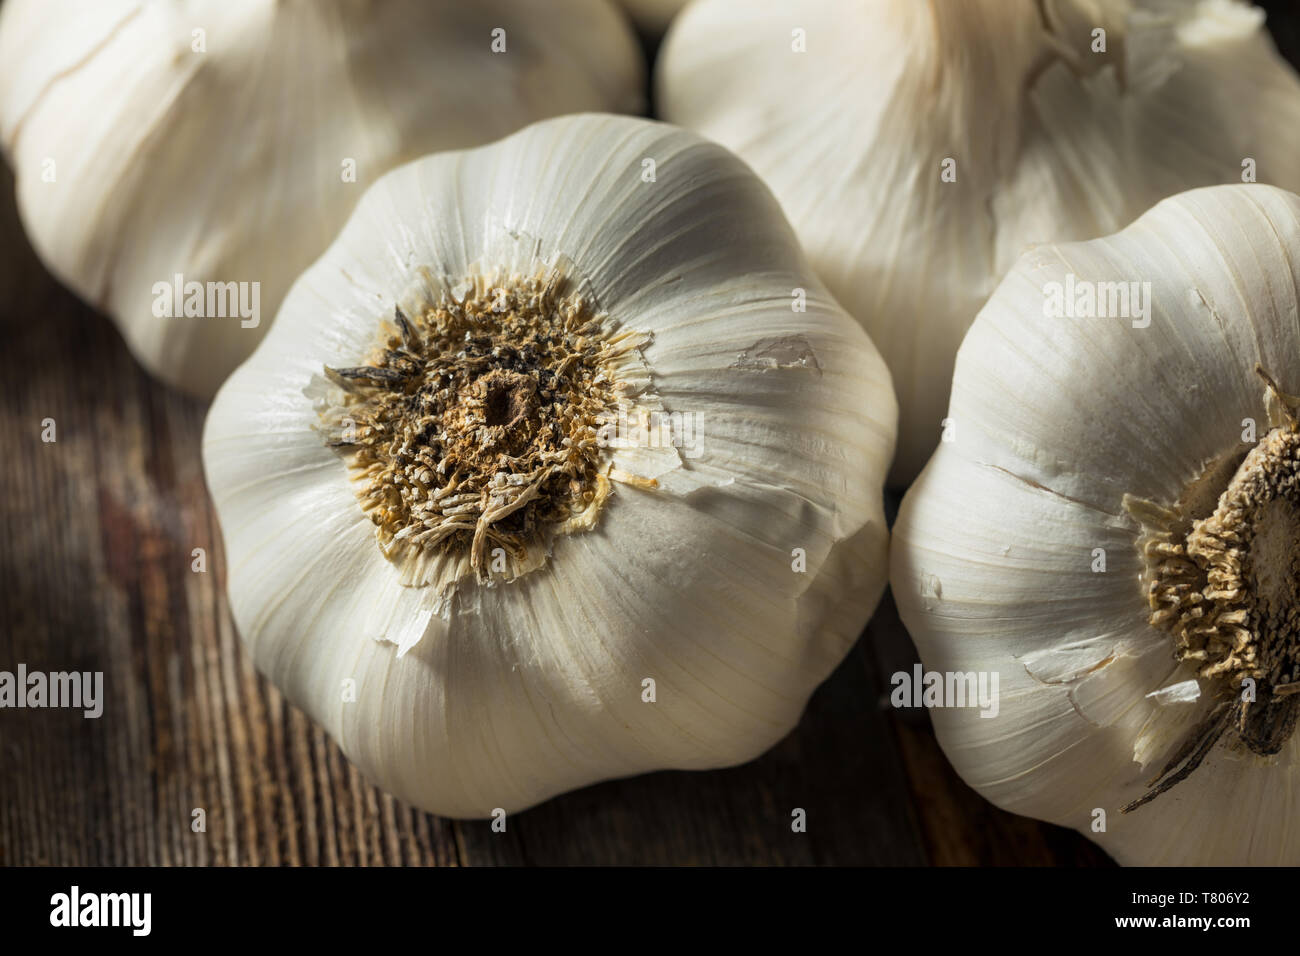 Raw Organic Garlic Bulbs Ready to Cook With Stock Photo